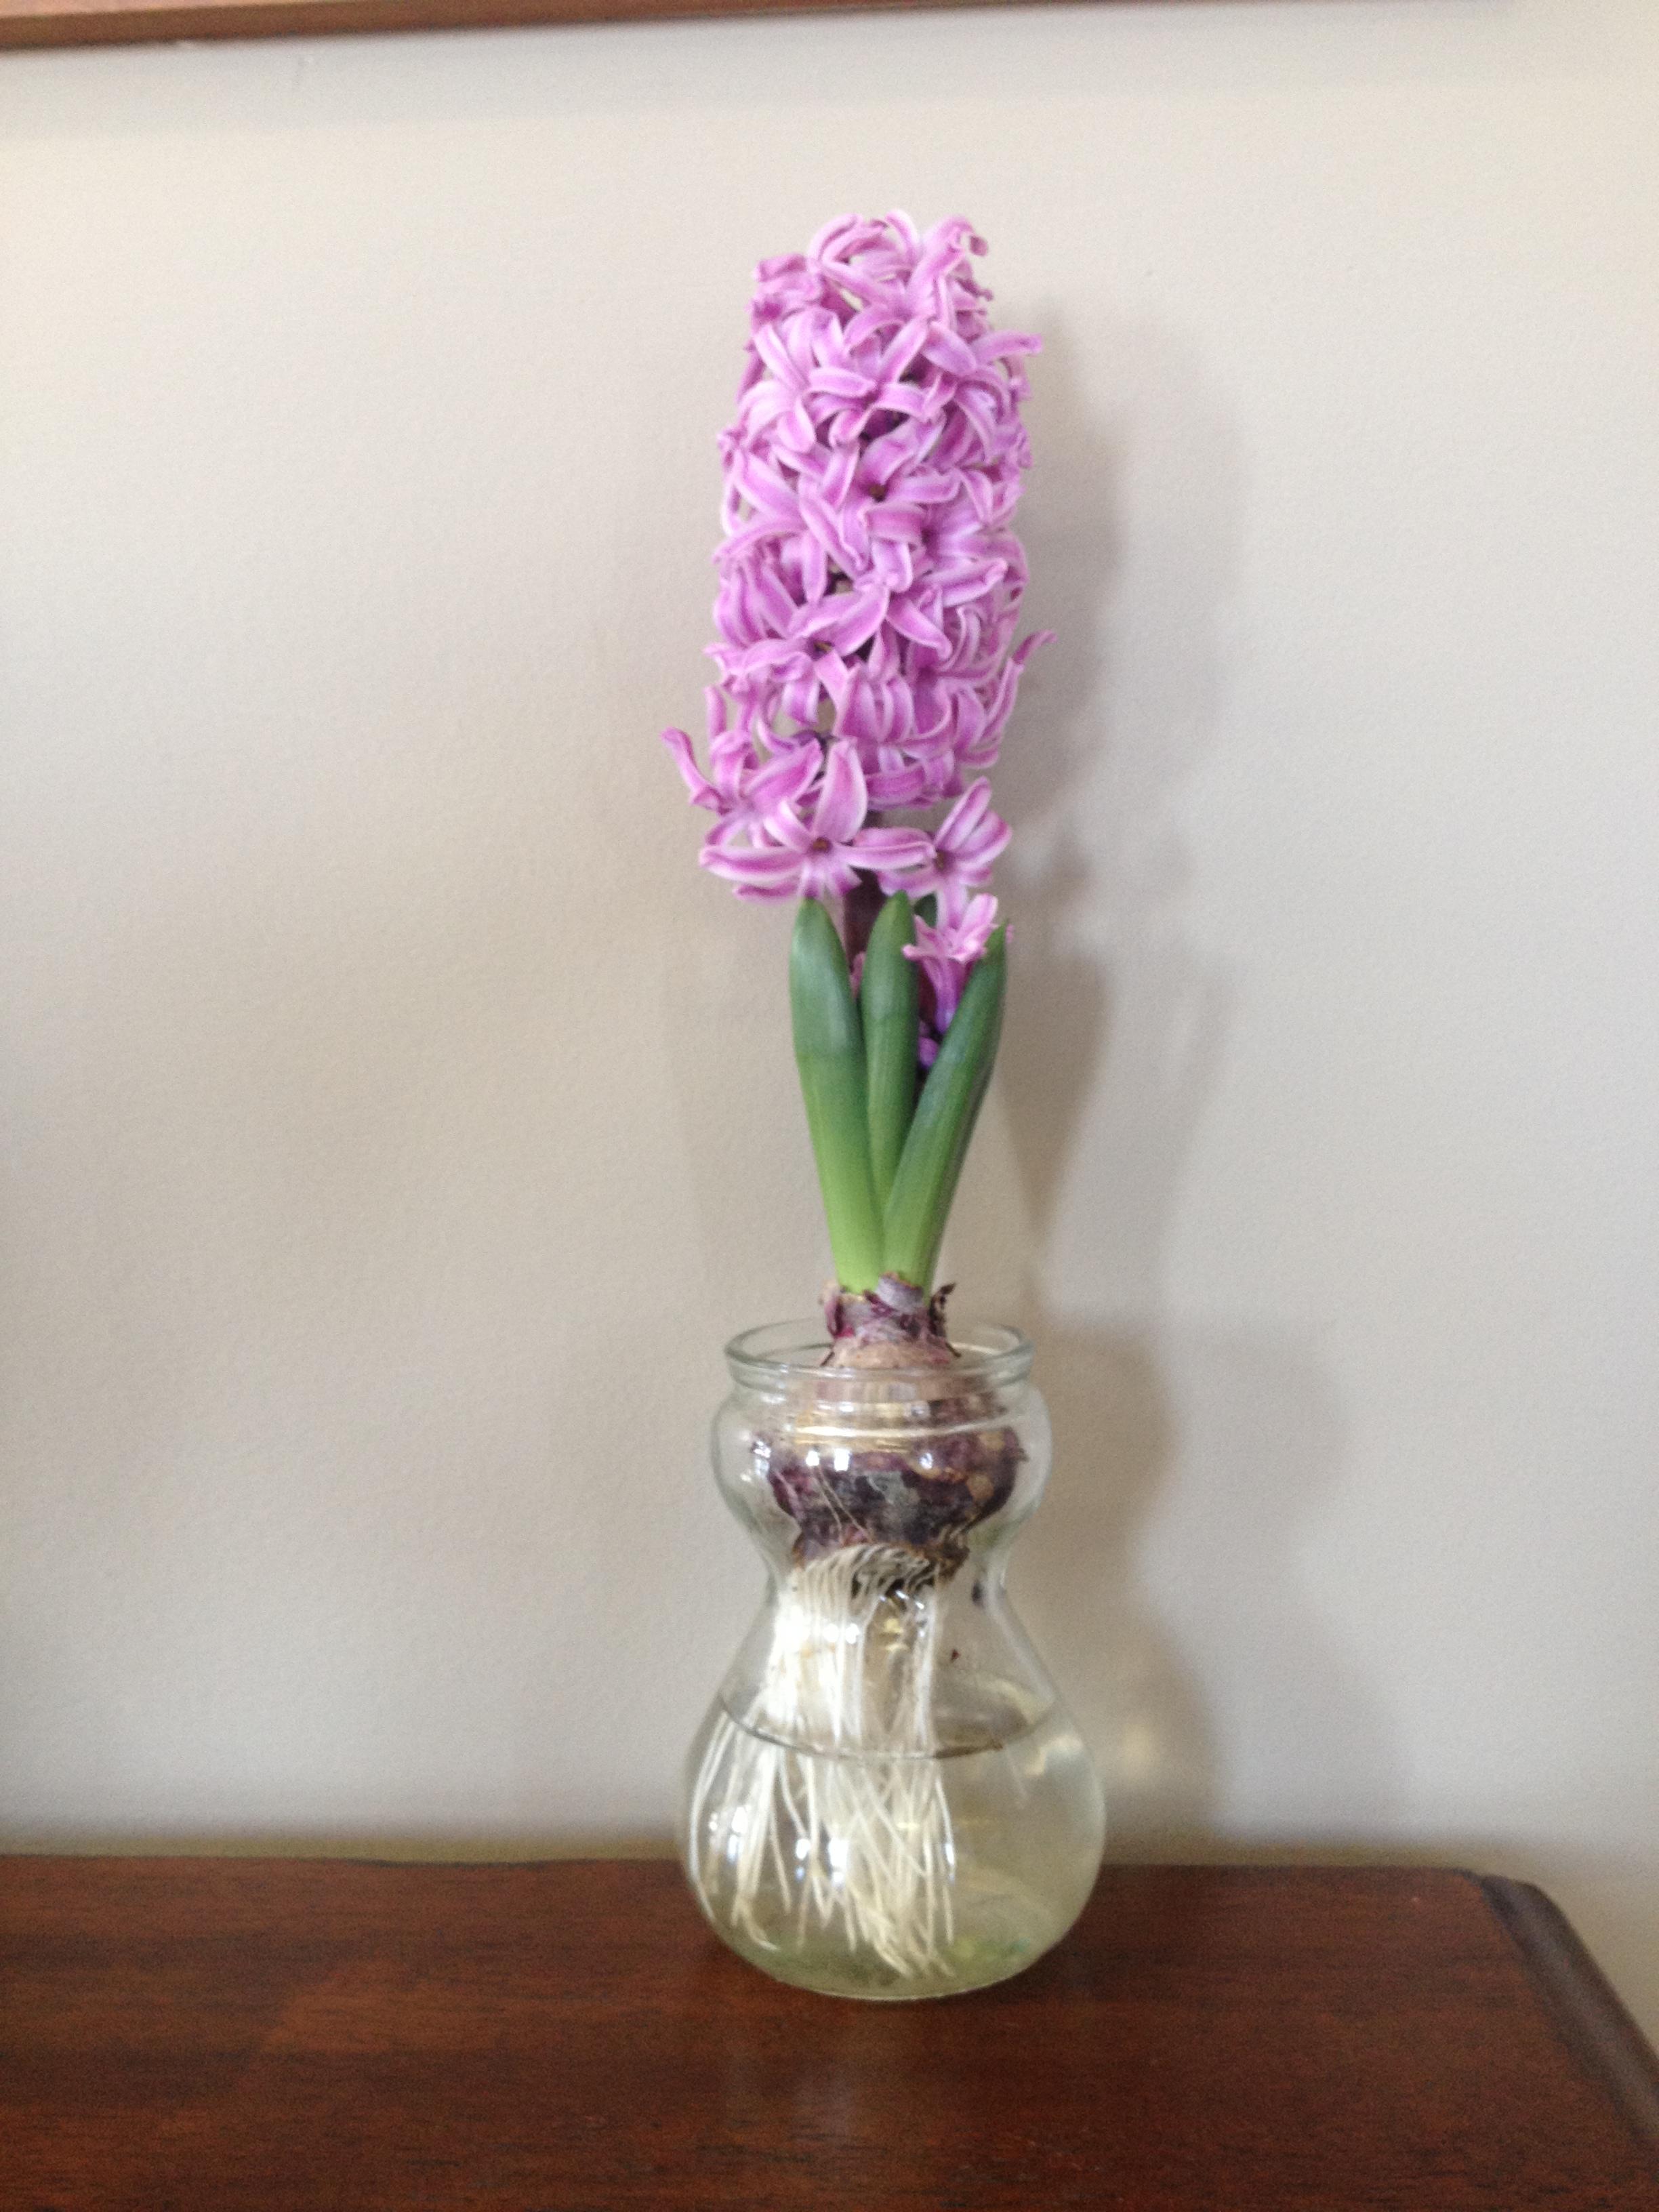 Hyacinth Gift Kits from Leo Berbee Bulb Company